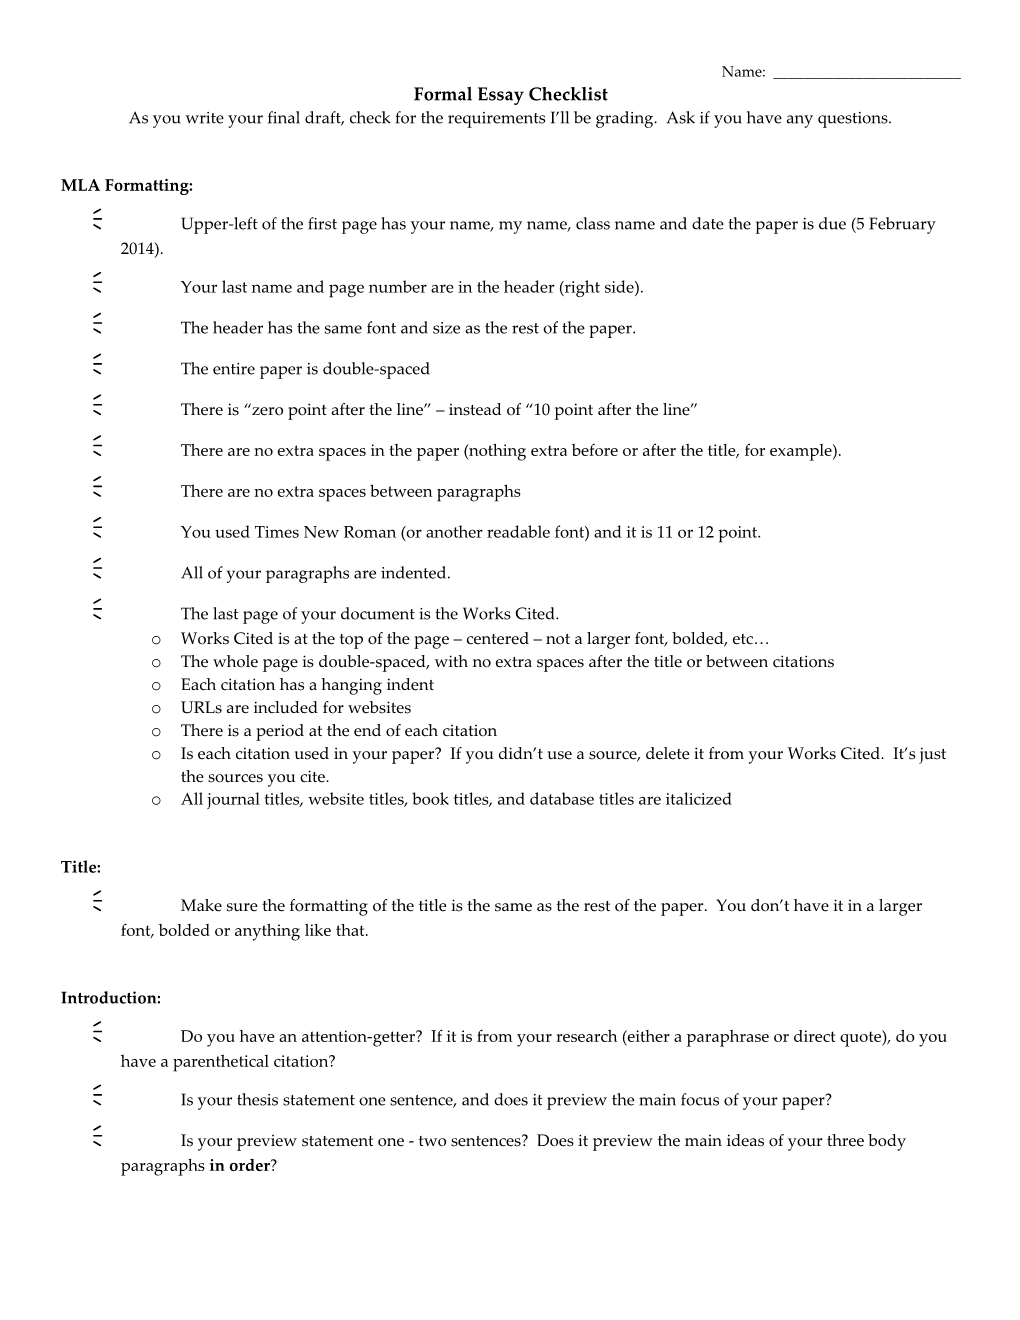 Formal Essay Checklist